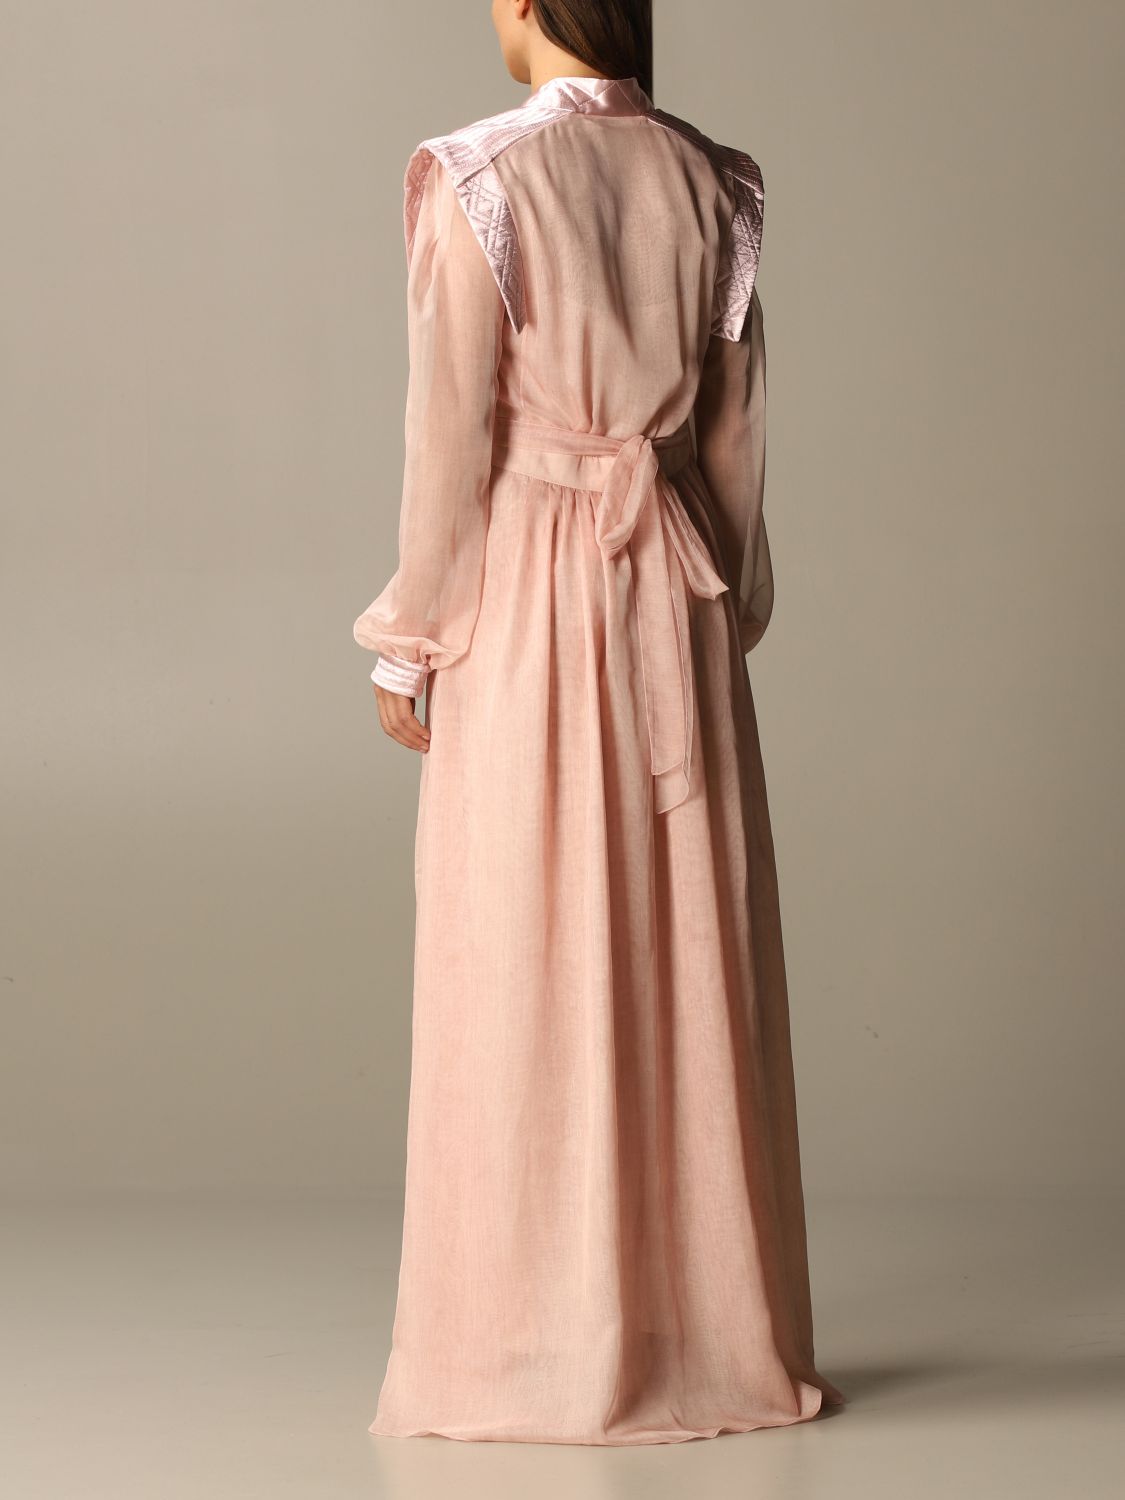 Dress Philosophy Di Lorenzo Serafini: Philosophy Di Lorenzo Serafini long dress with quilted details pink 3